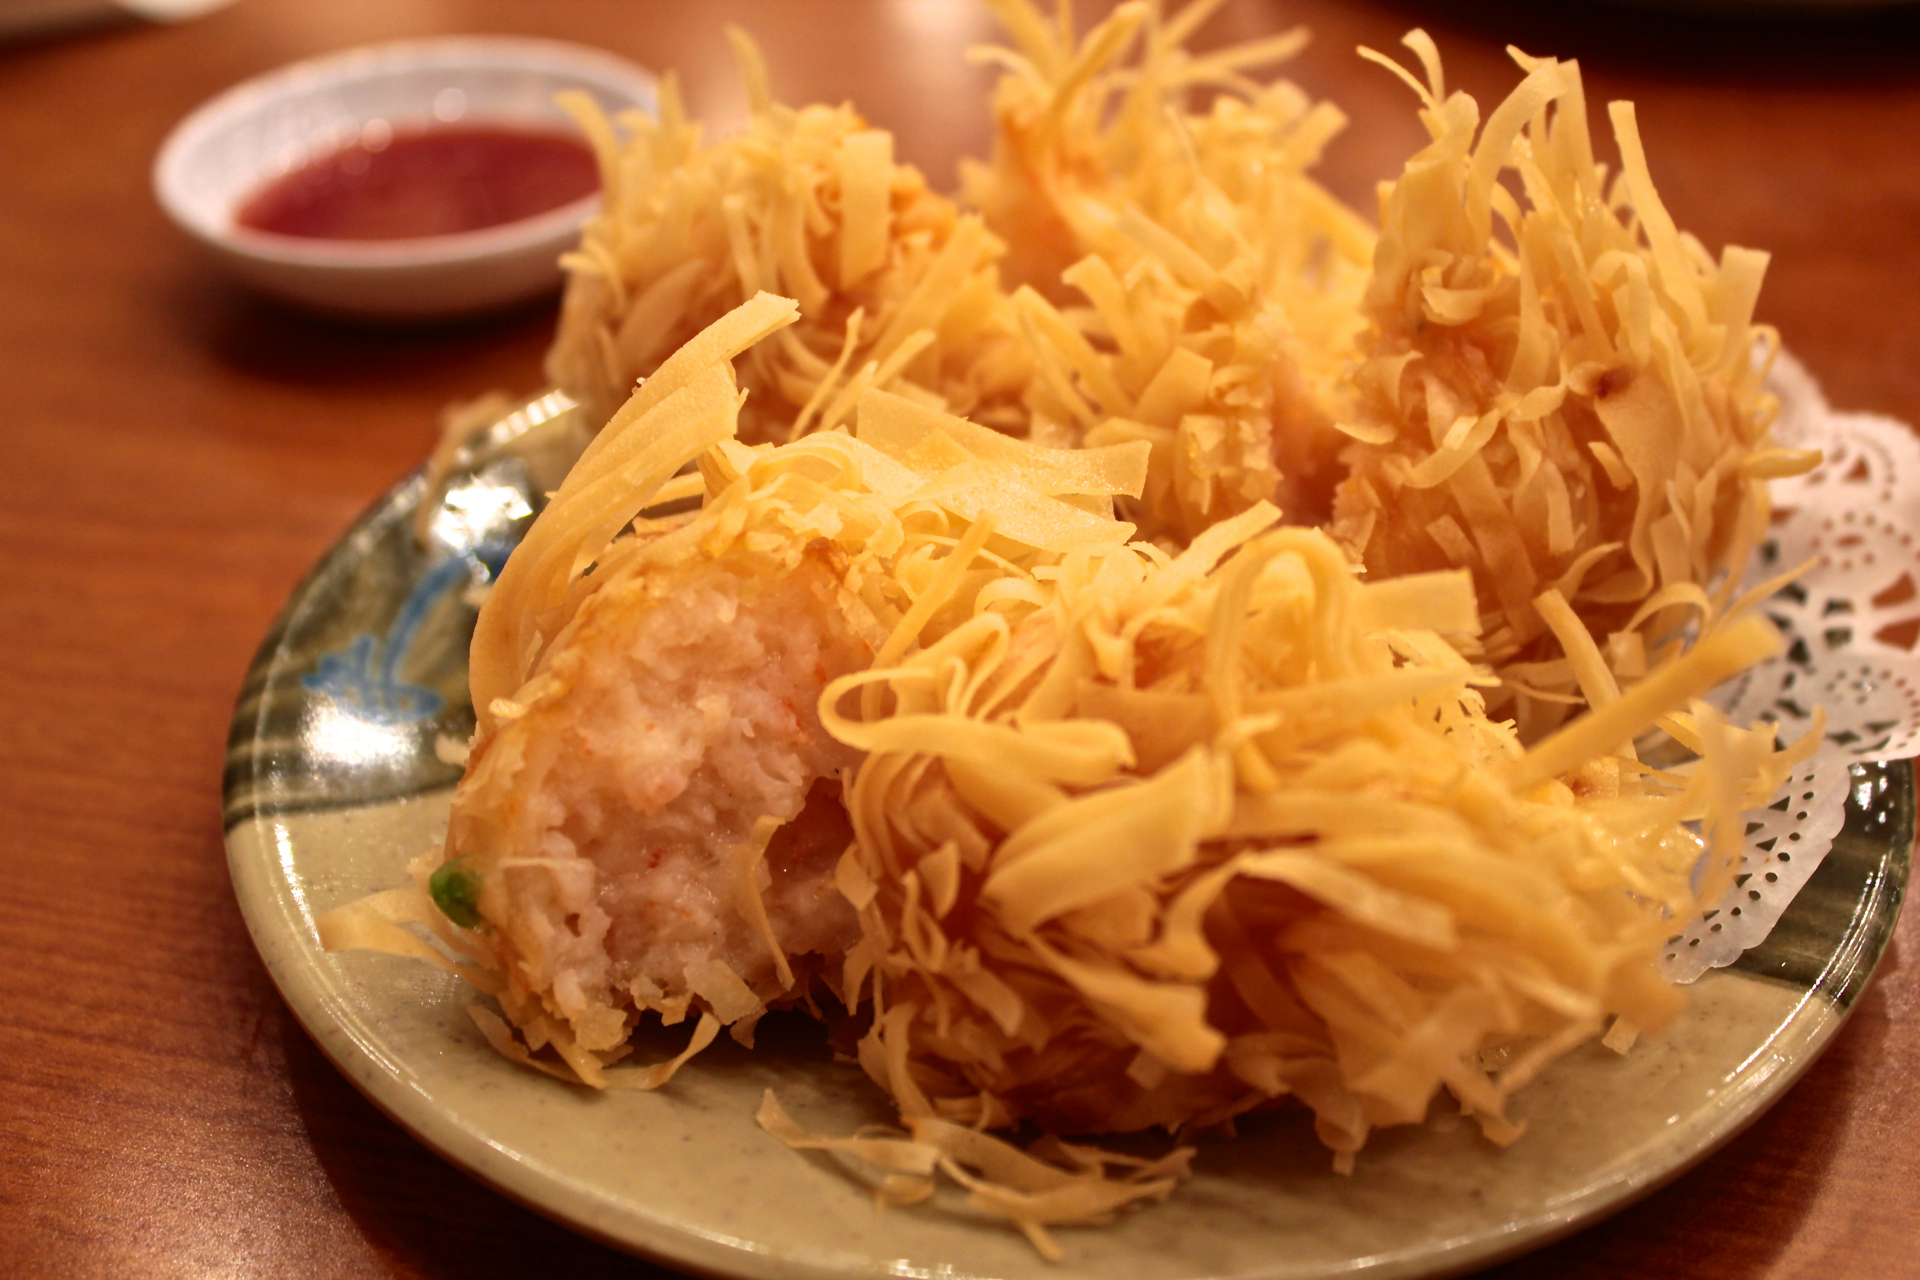 Fried shrimp balls at Saigon Seafood Harbor Restaurant.